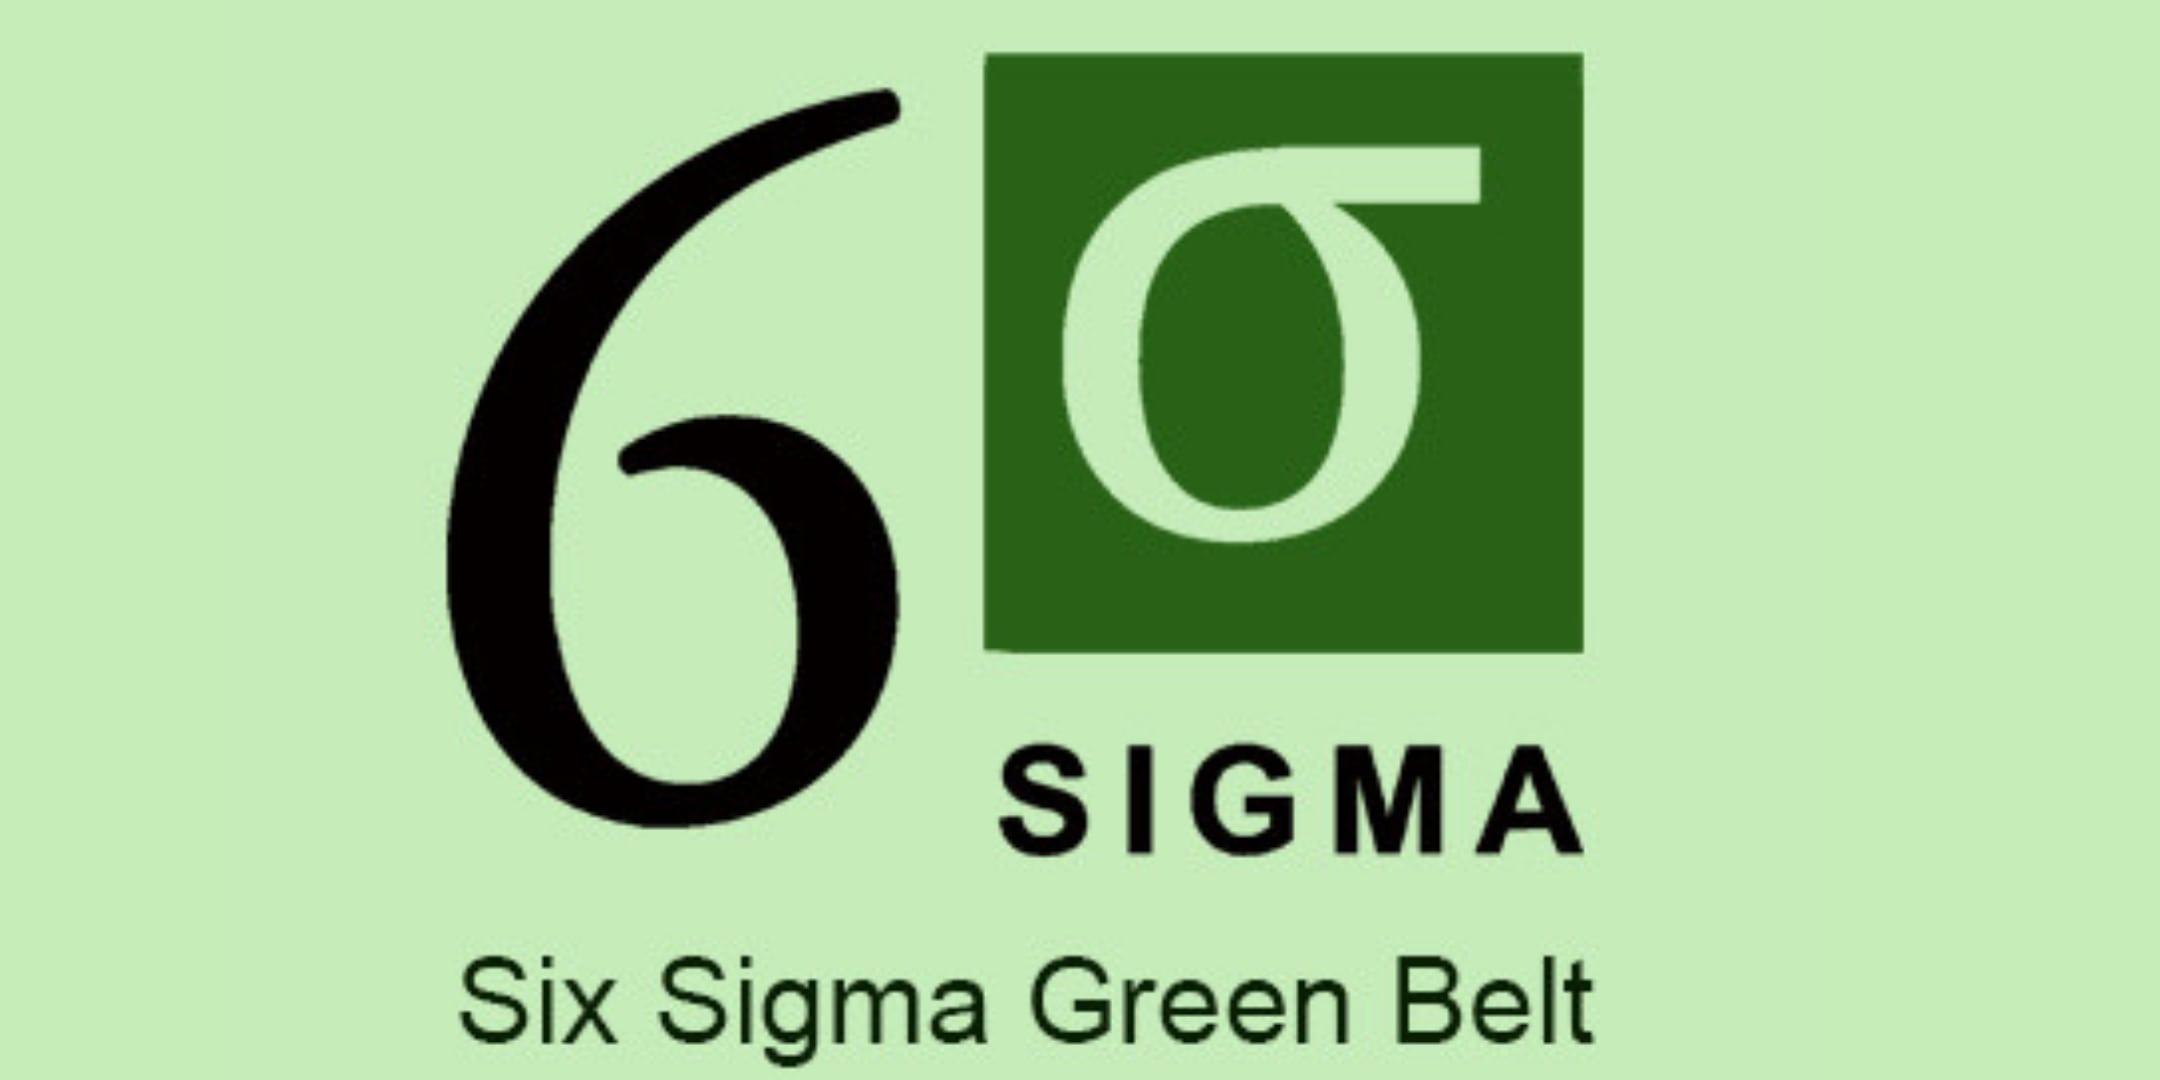 Lean Six Sigma Green Belt (LSSGB) Certification Training in Atlanta, GA 